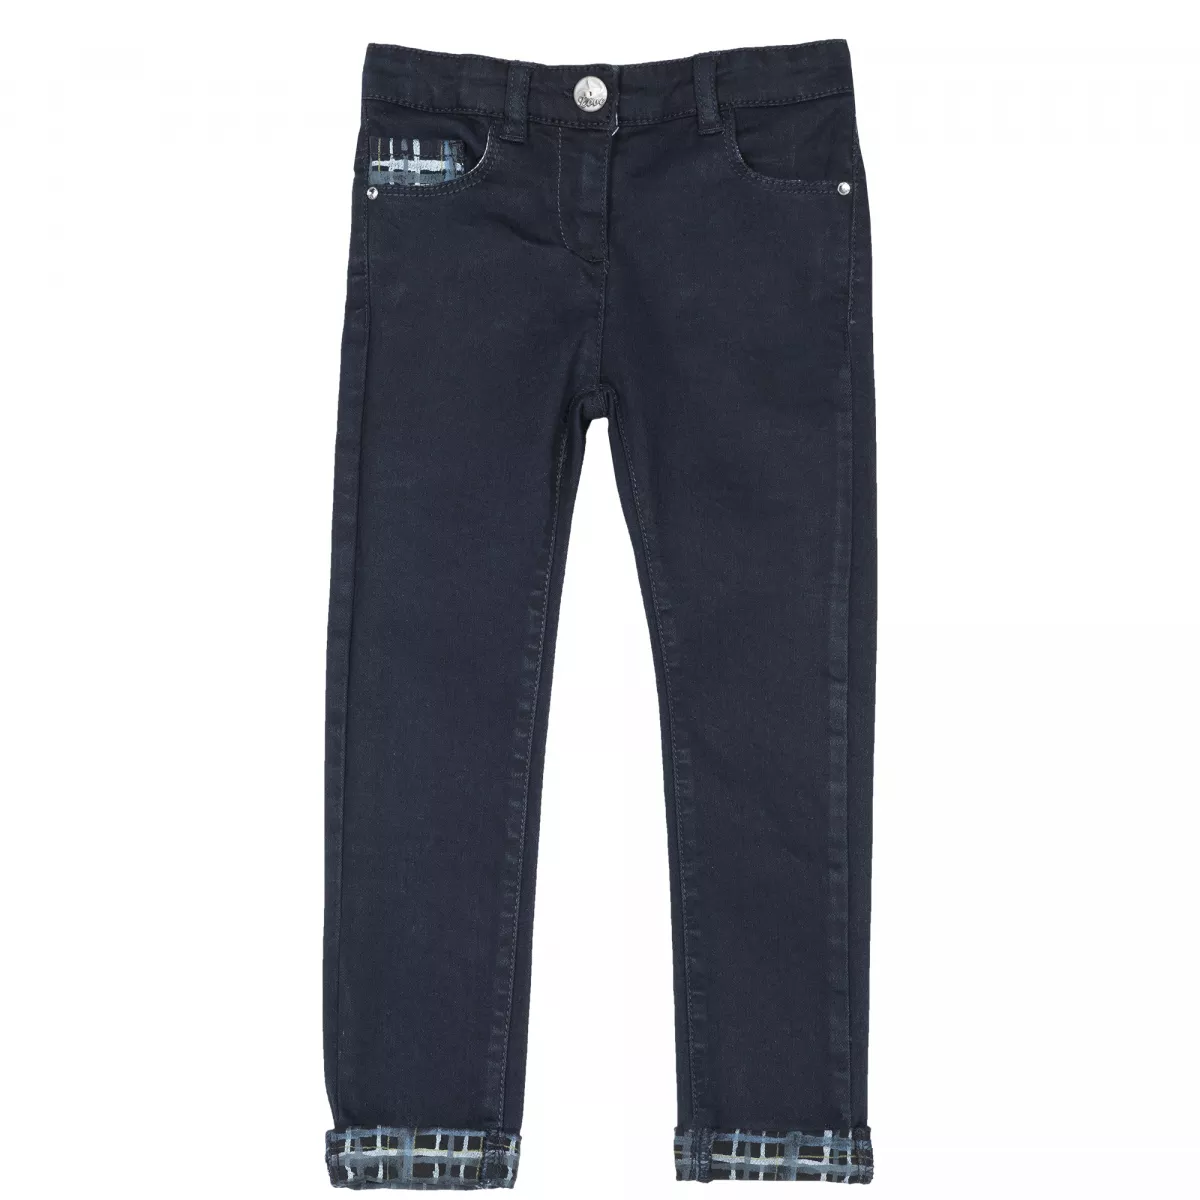 Pantaloni lungi jeans copii Chicco, albastru inchis, 128